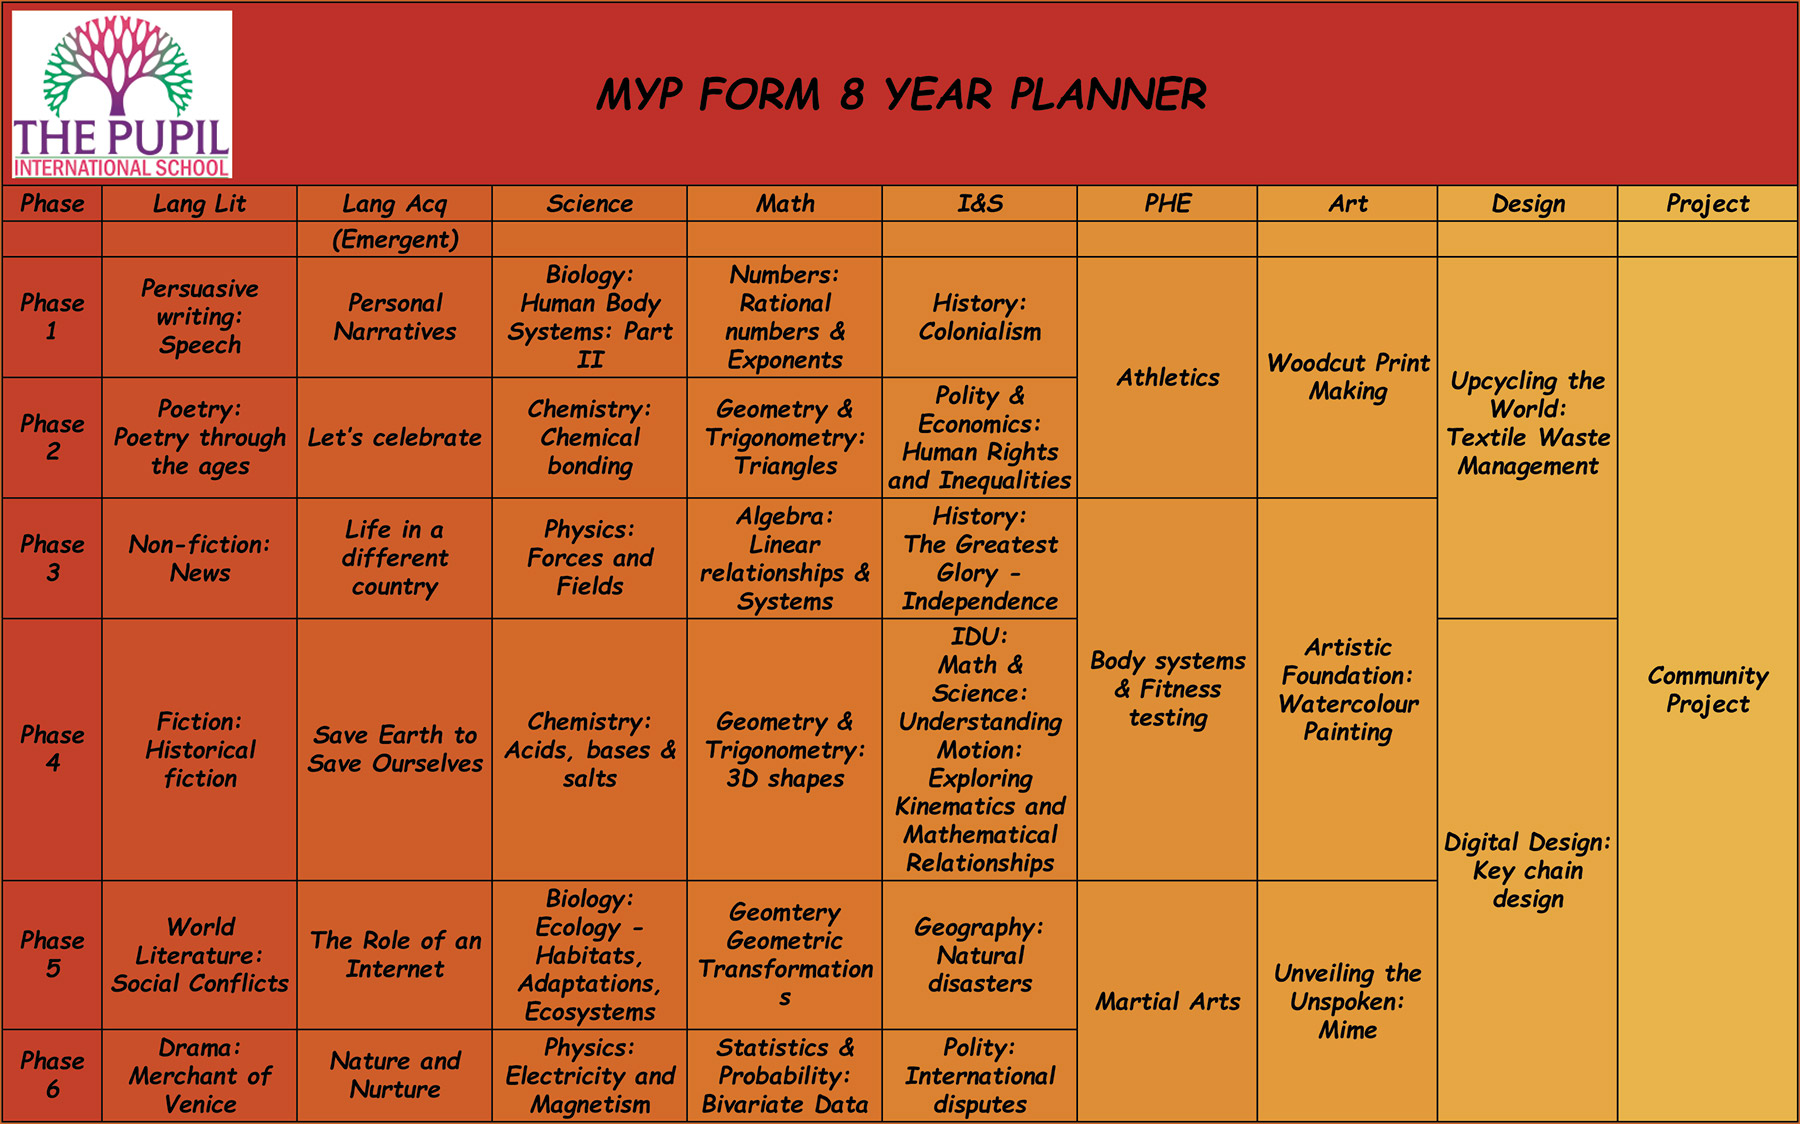 MYP FORM 8 YEAR PLANNER